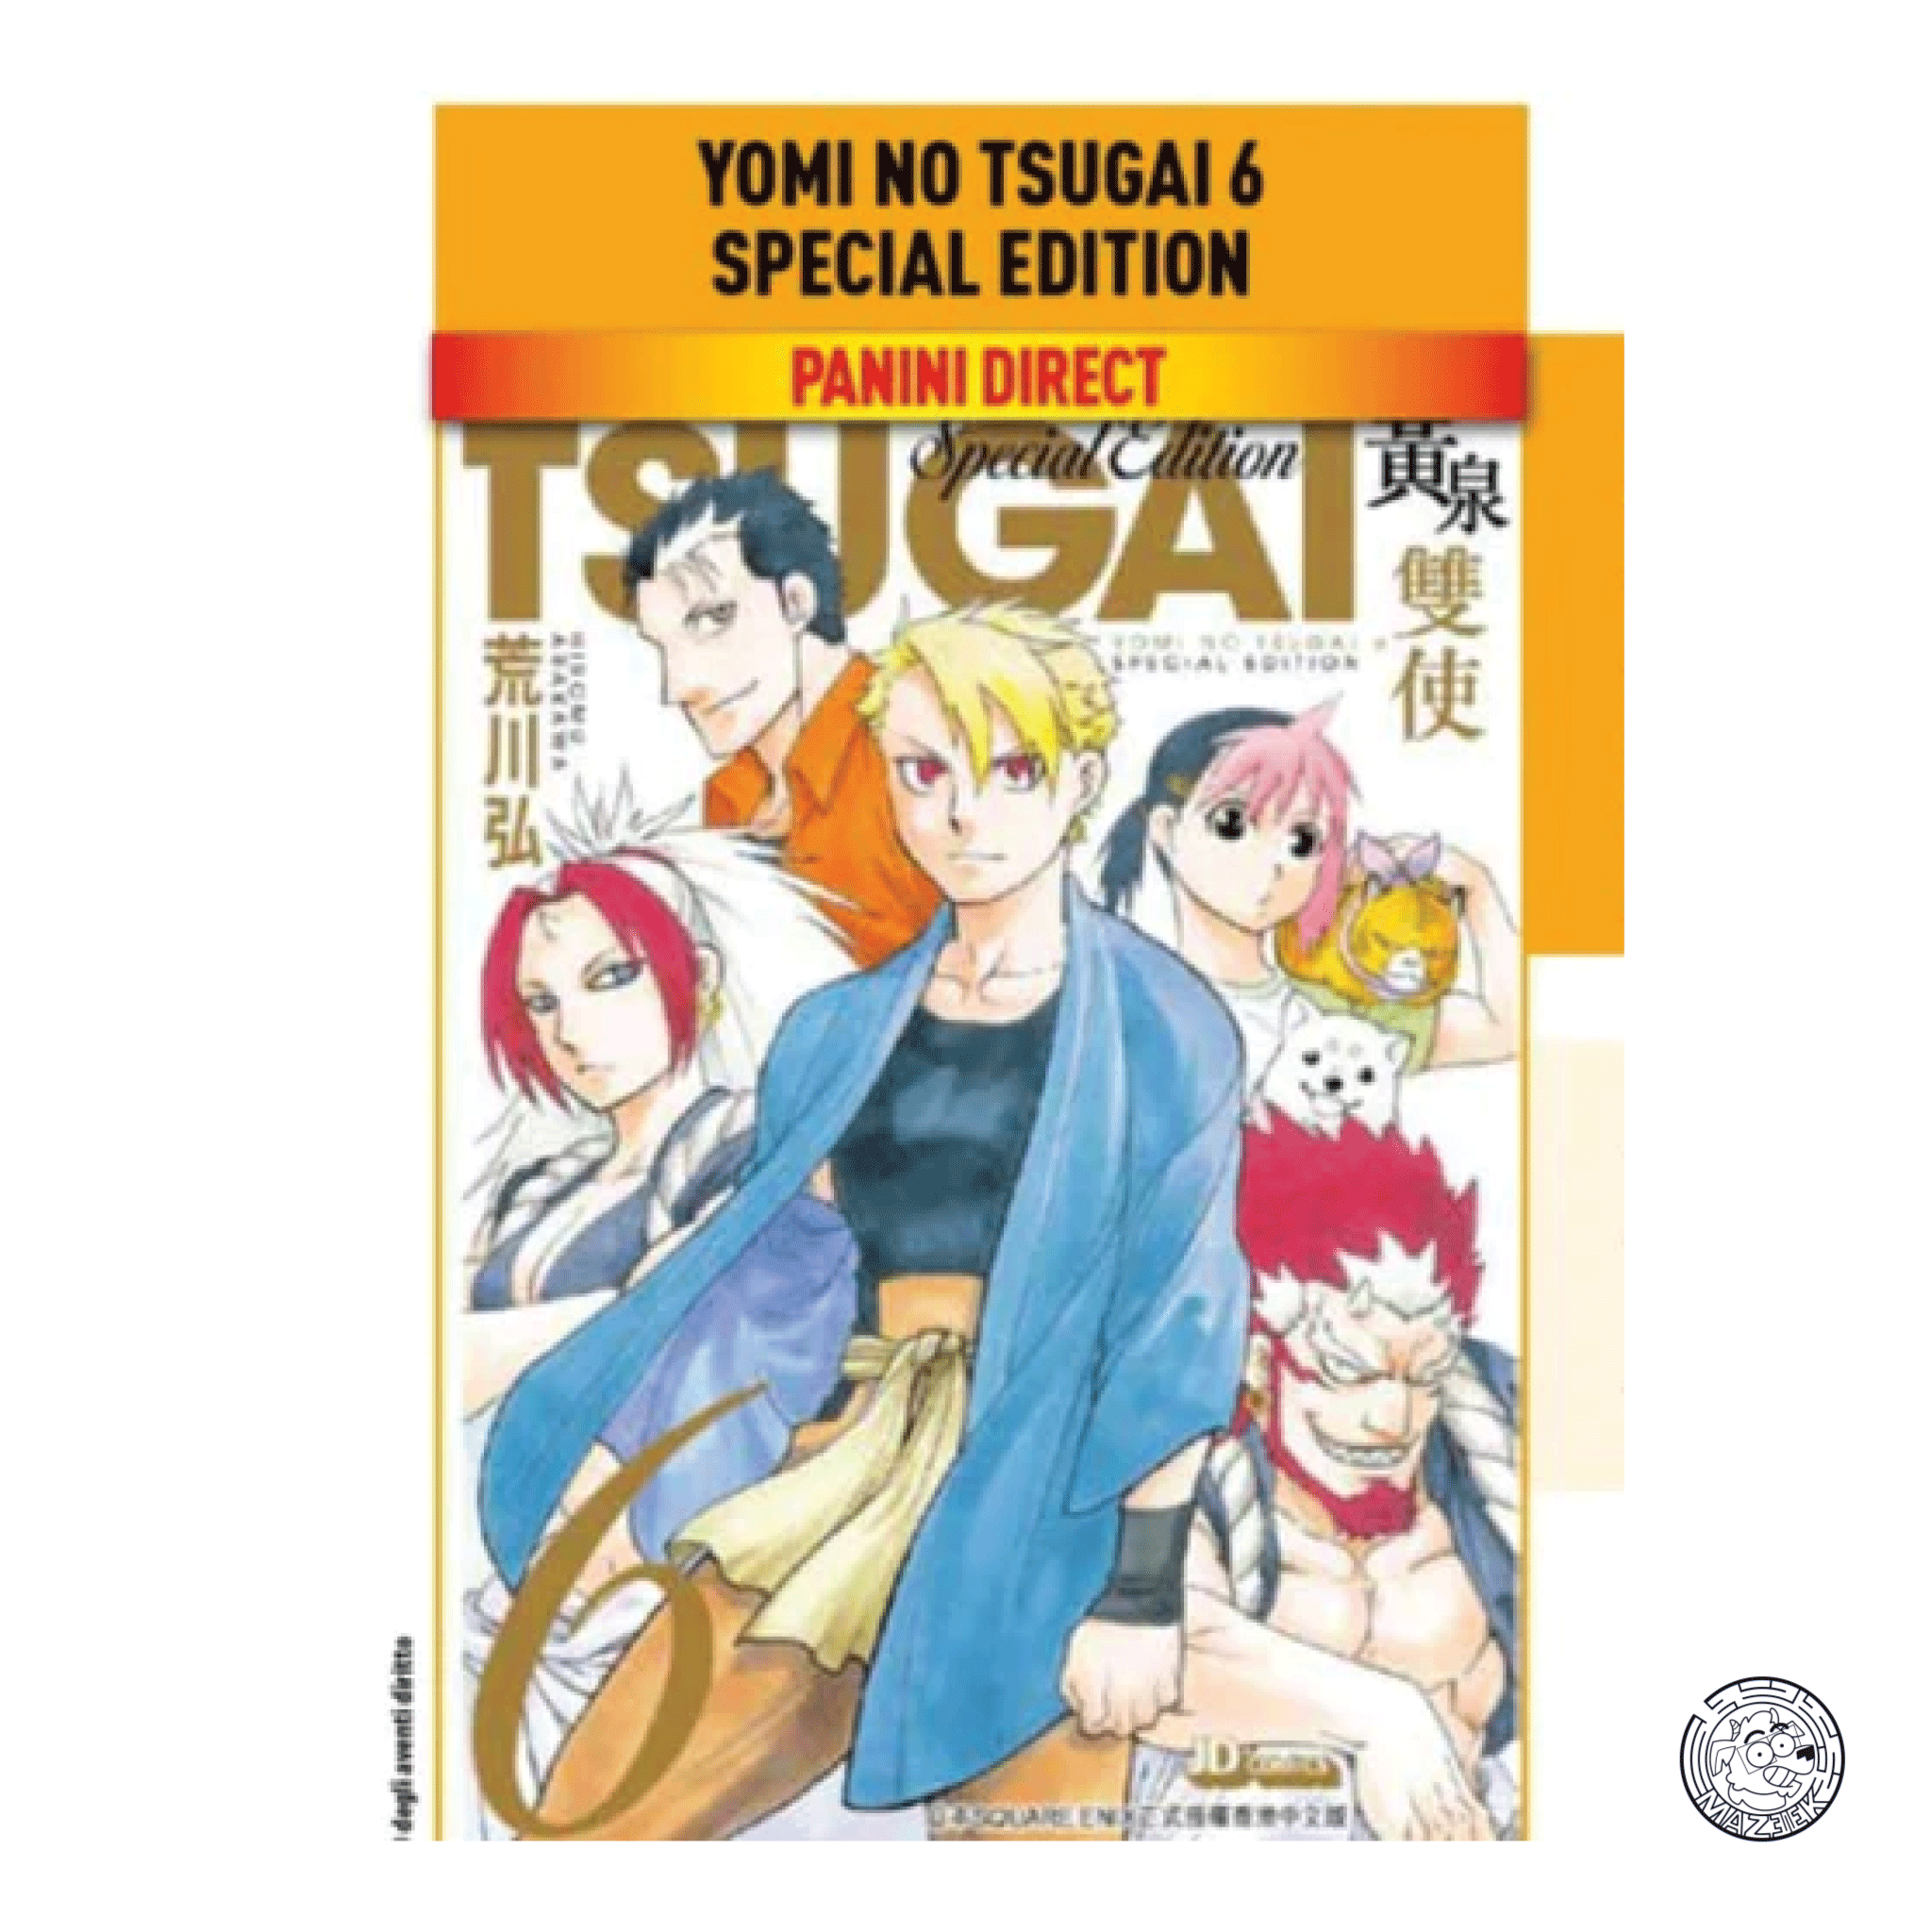 Yomi no Tsugai 06 - Special Edition